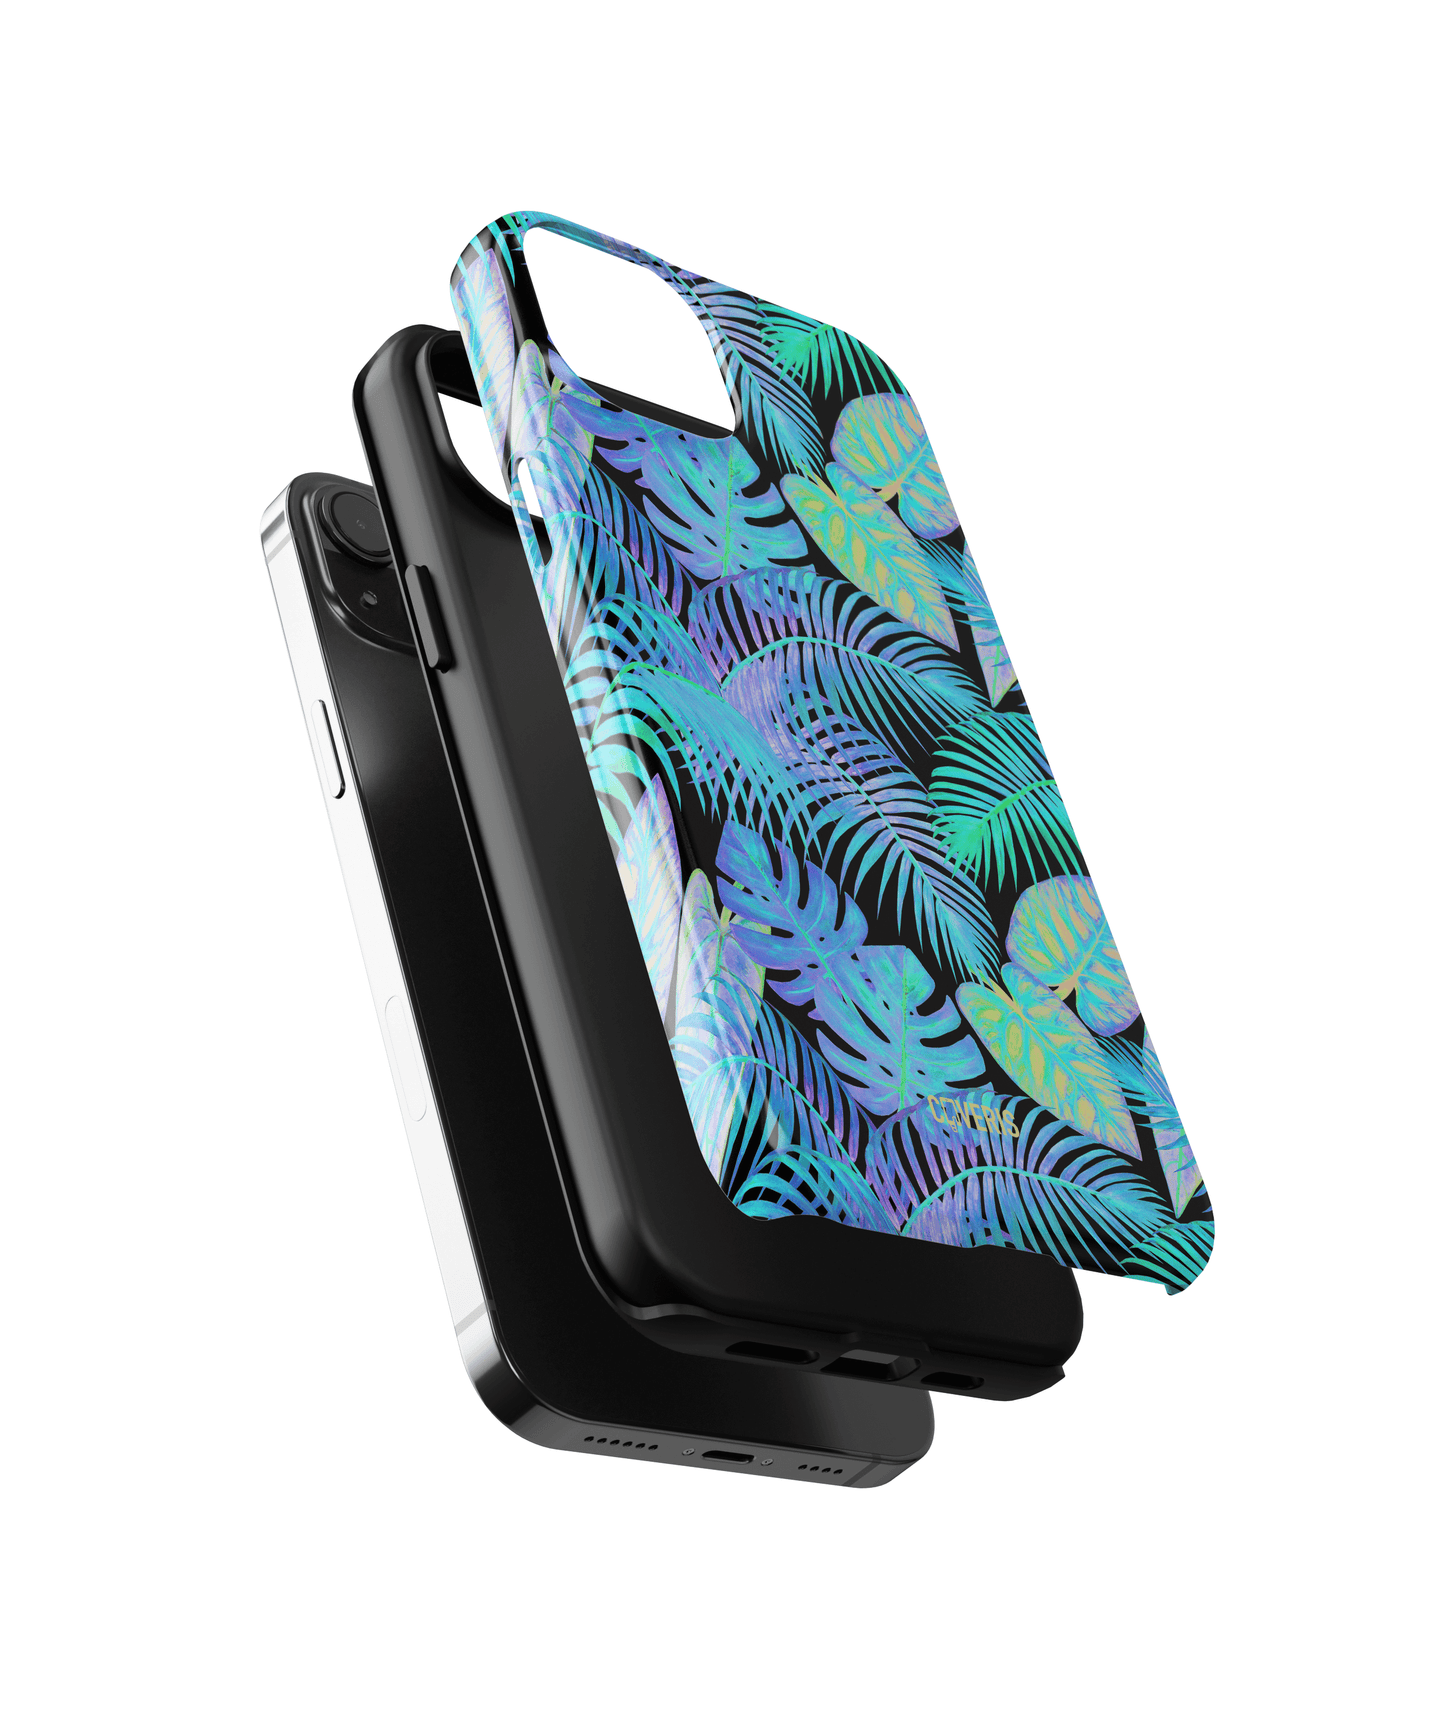 Tropic - Samsung Galaxy S10 Plus phone case